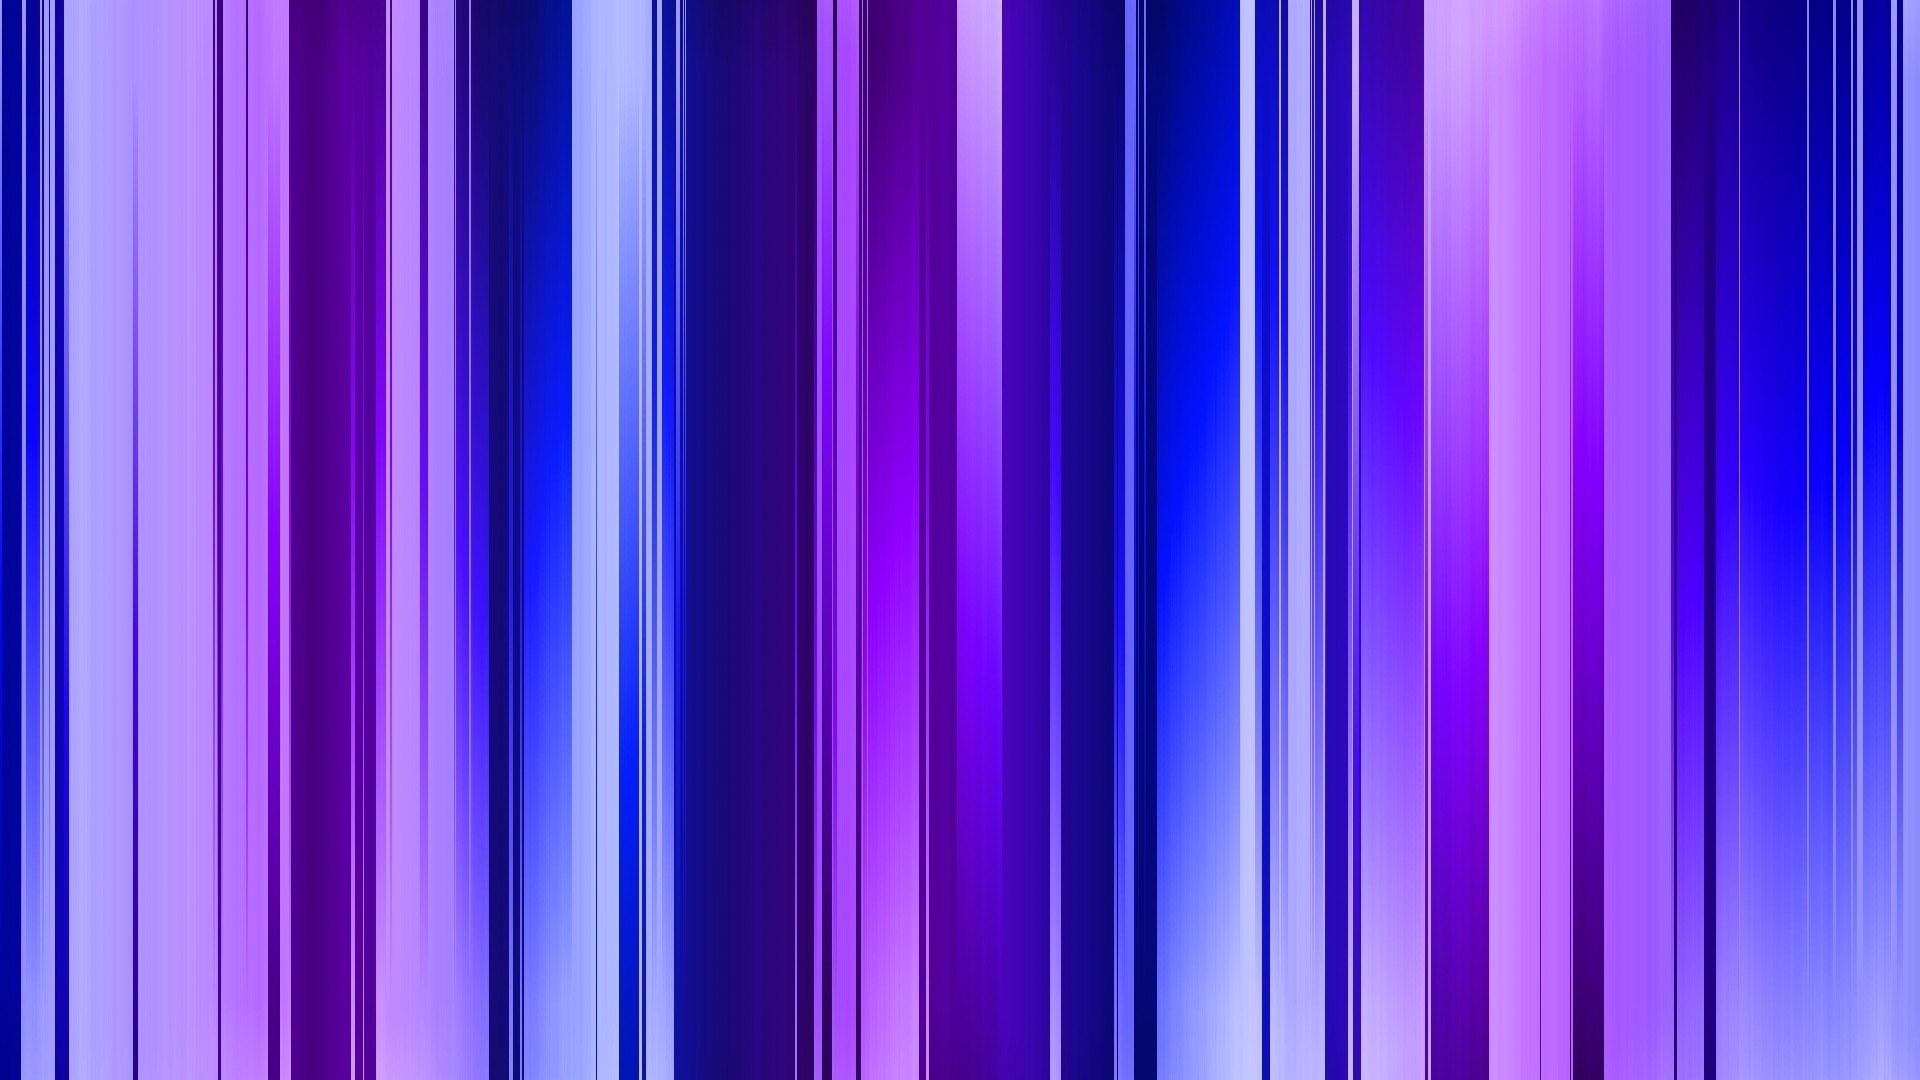 1920x1080 Title : blue and purple background Â·â  download free cool wallpapers for.  Dimension : 1920 x 1080. File Type : JPG/JPEG